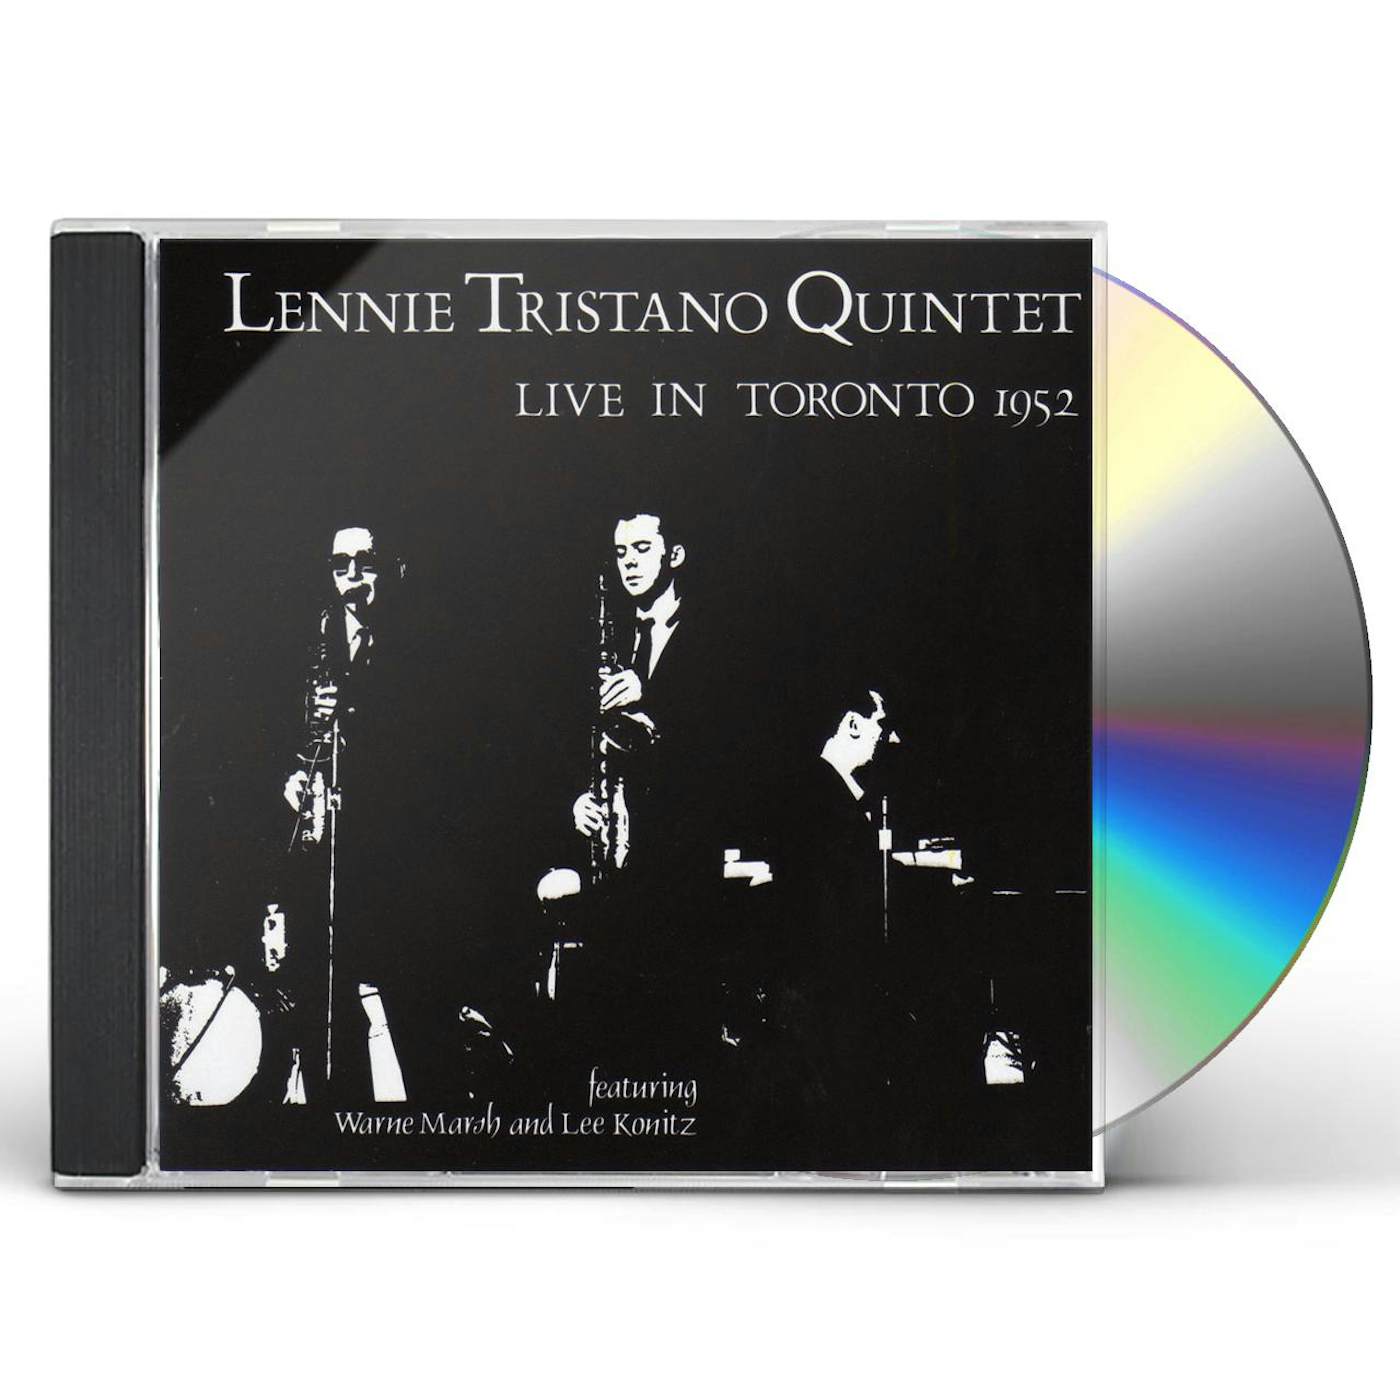 LENNIE TRISTANO QUINTET LIVE IN TORONTO 1952 CD